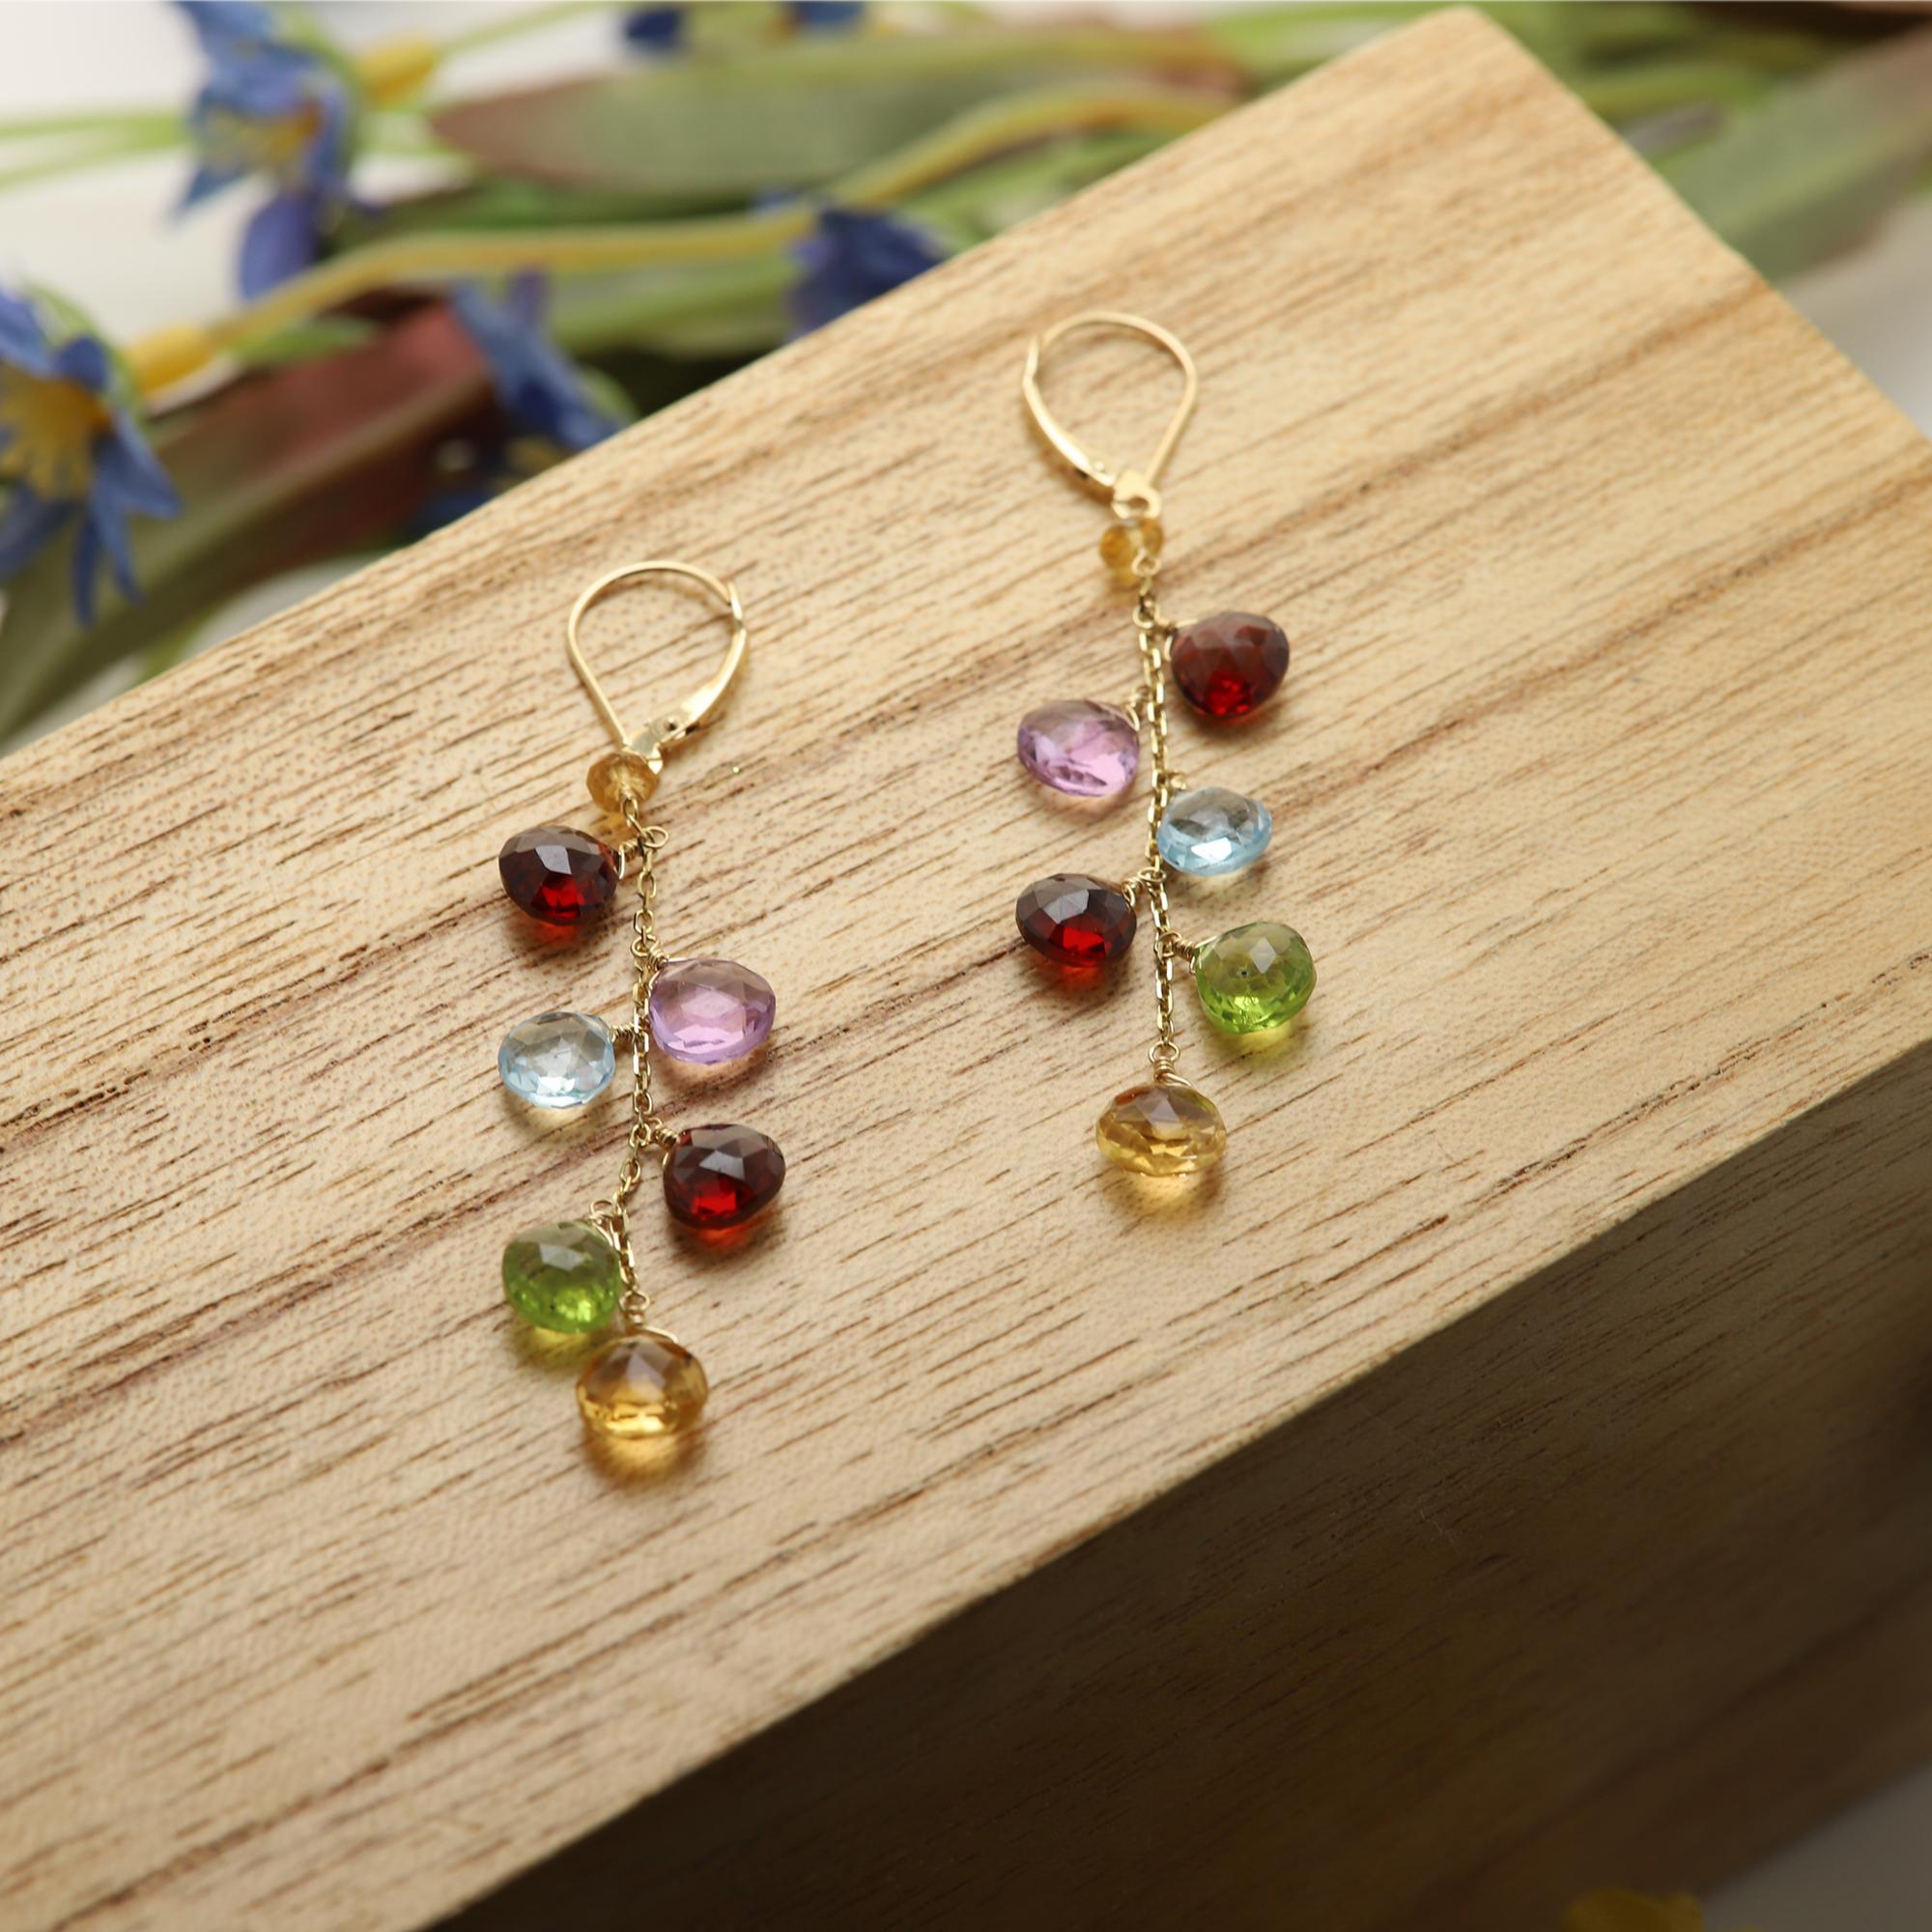 14k gold multi-color smi-precious stone earring